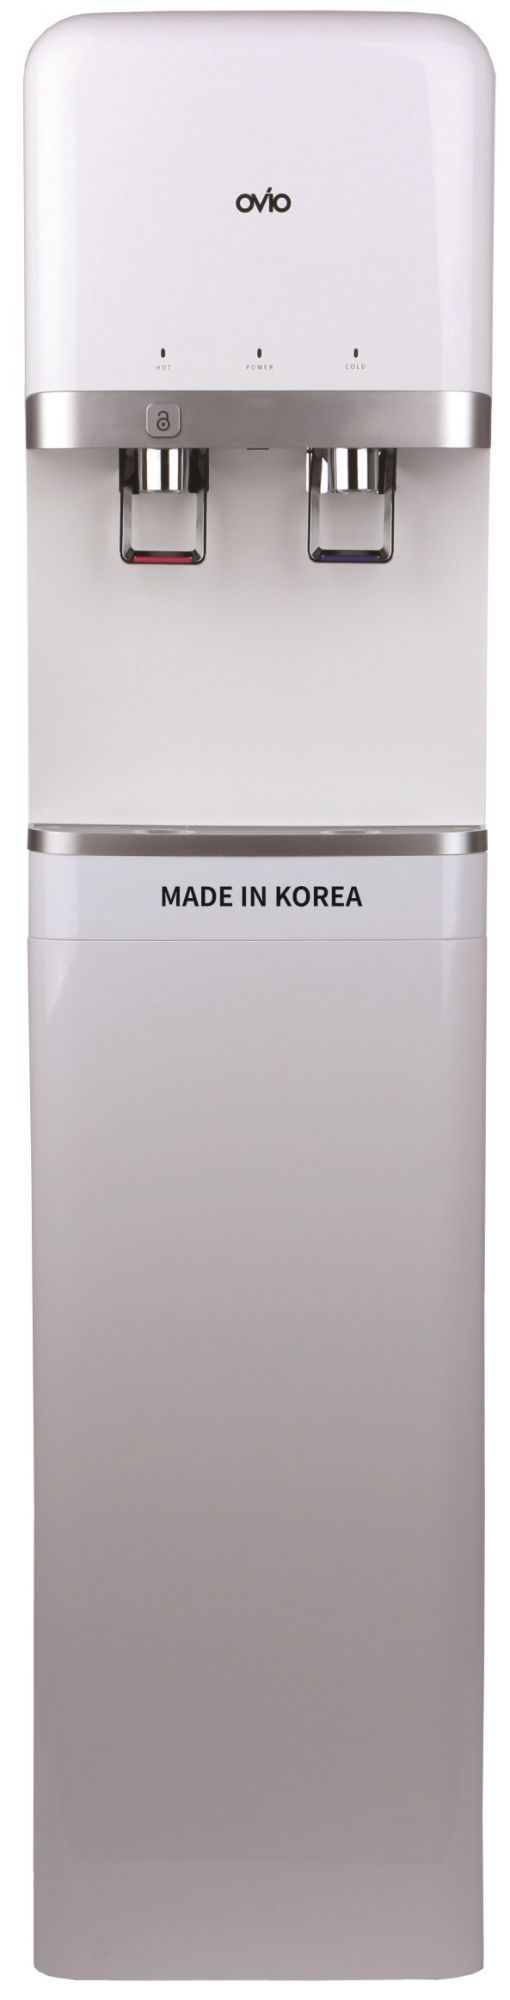 Korea Water Dispenser - OVIO